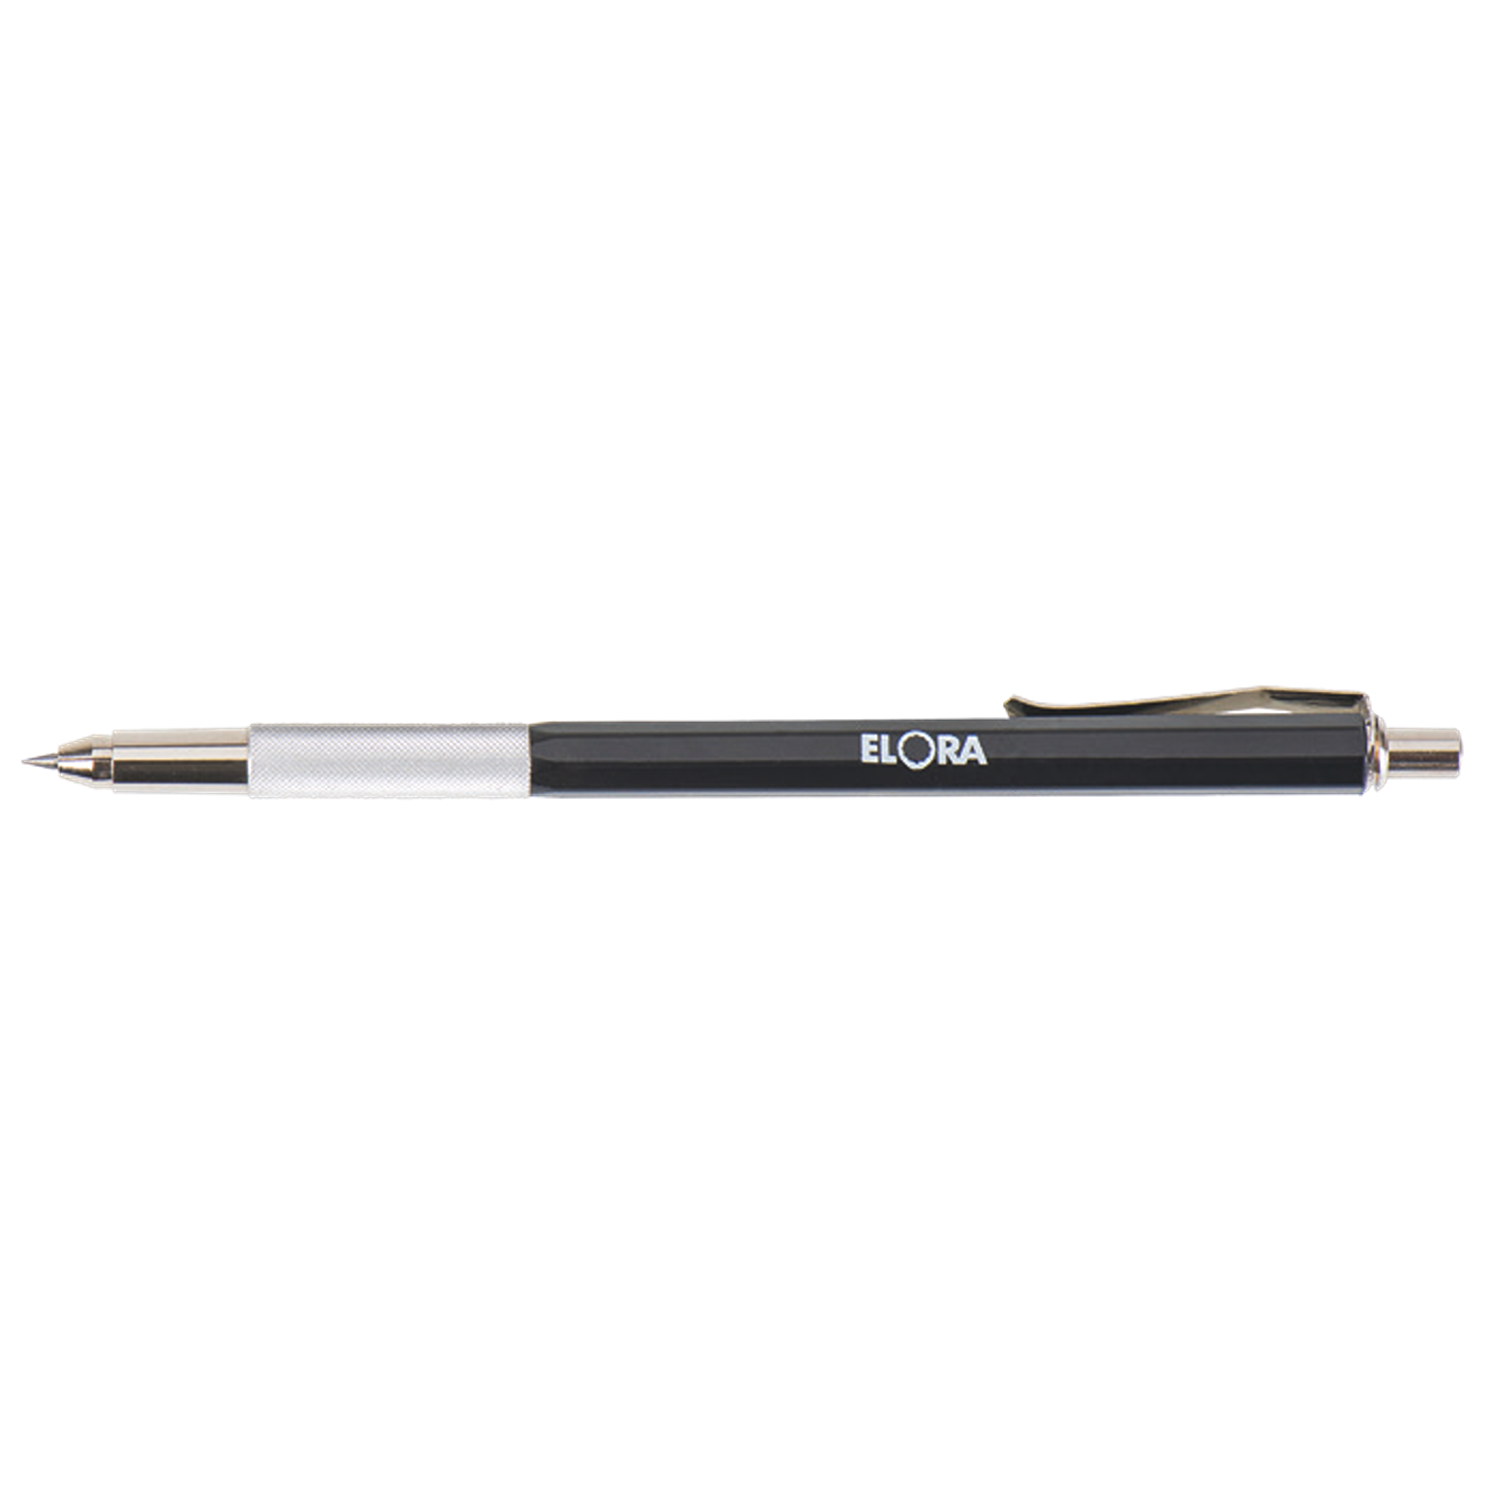 ELORA 1593E Carbide Engineer‘s Scriber (ELORA Tools) - Premium Scriber from ELORA - Shop now at Yew Aik.